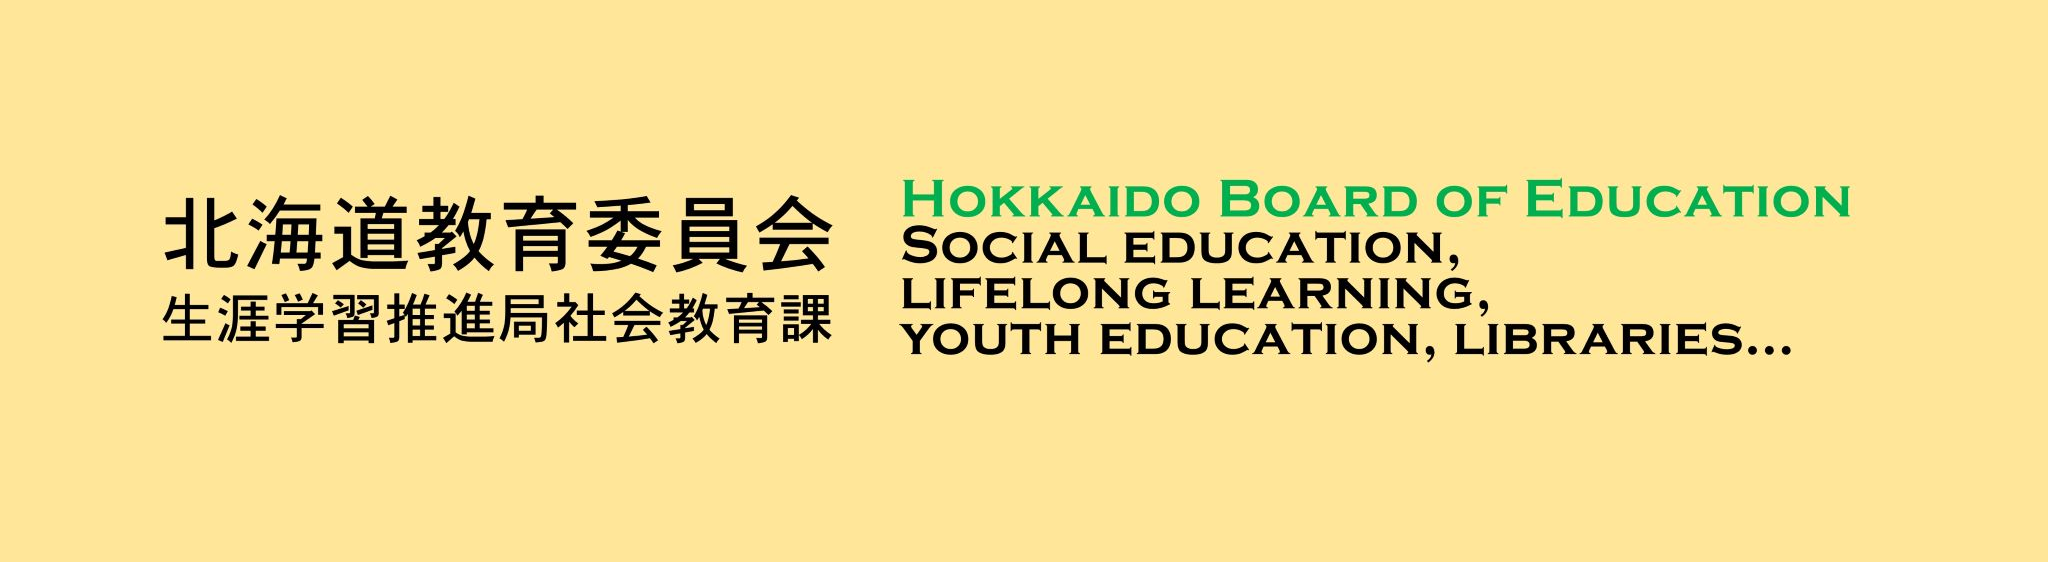 HOKKAIDO BOARD OF EDUCATION